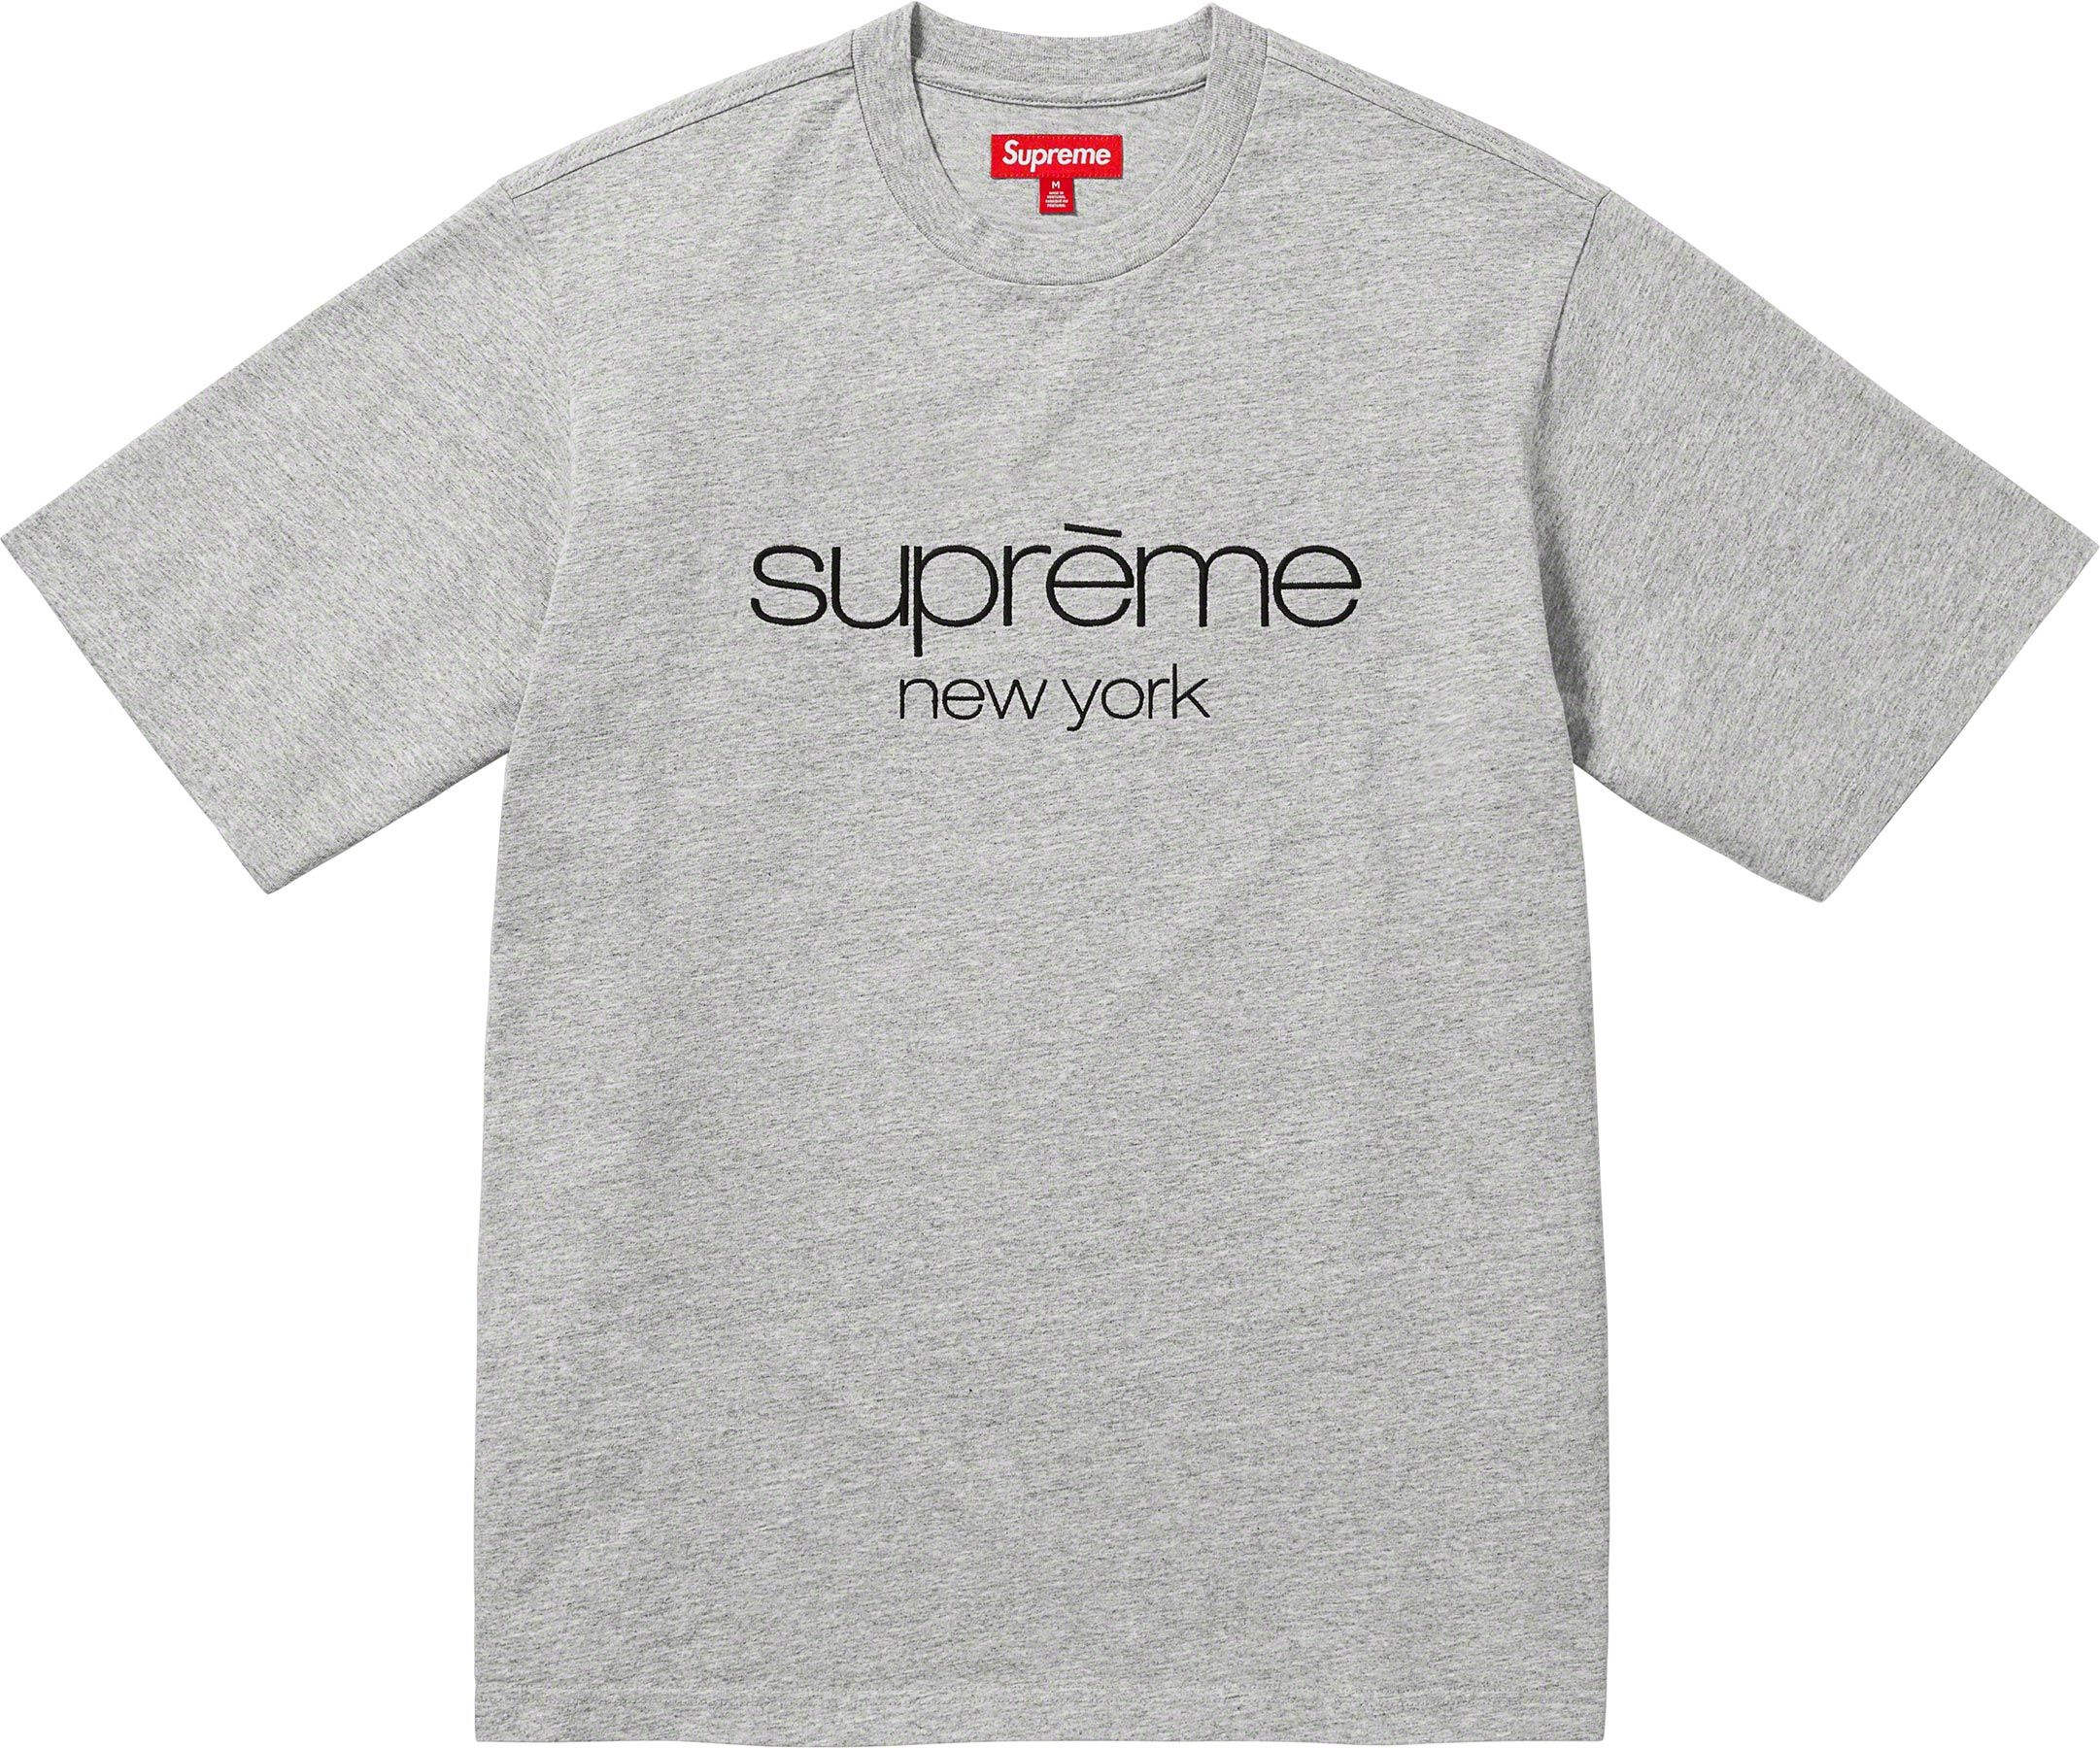 Supreme Classic Logo S/S Top White XLweek3